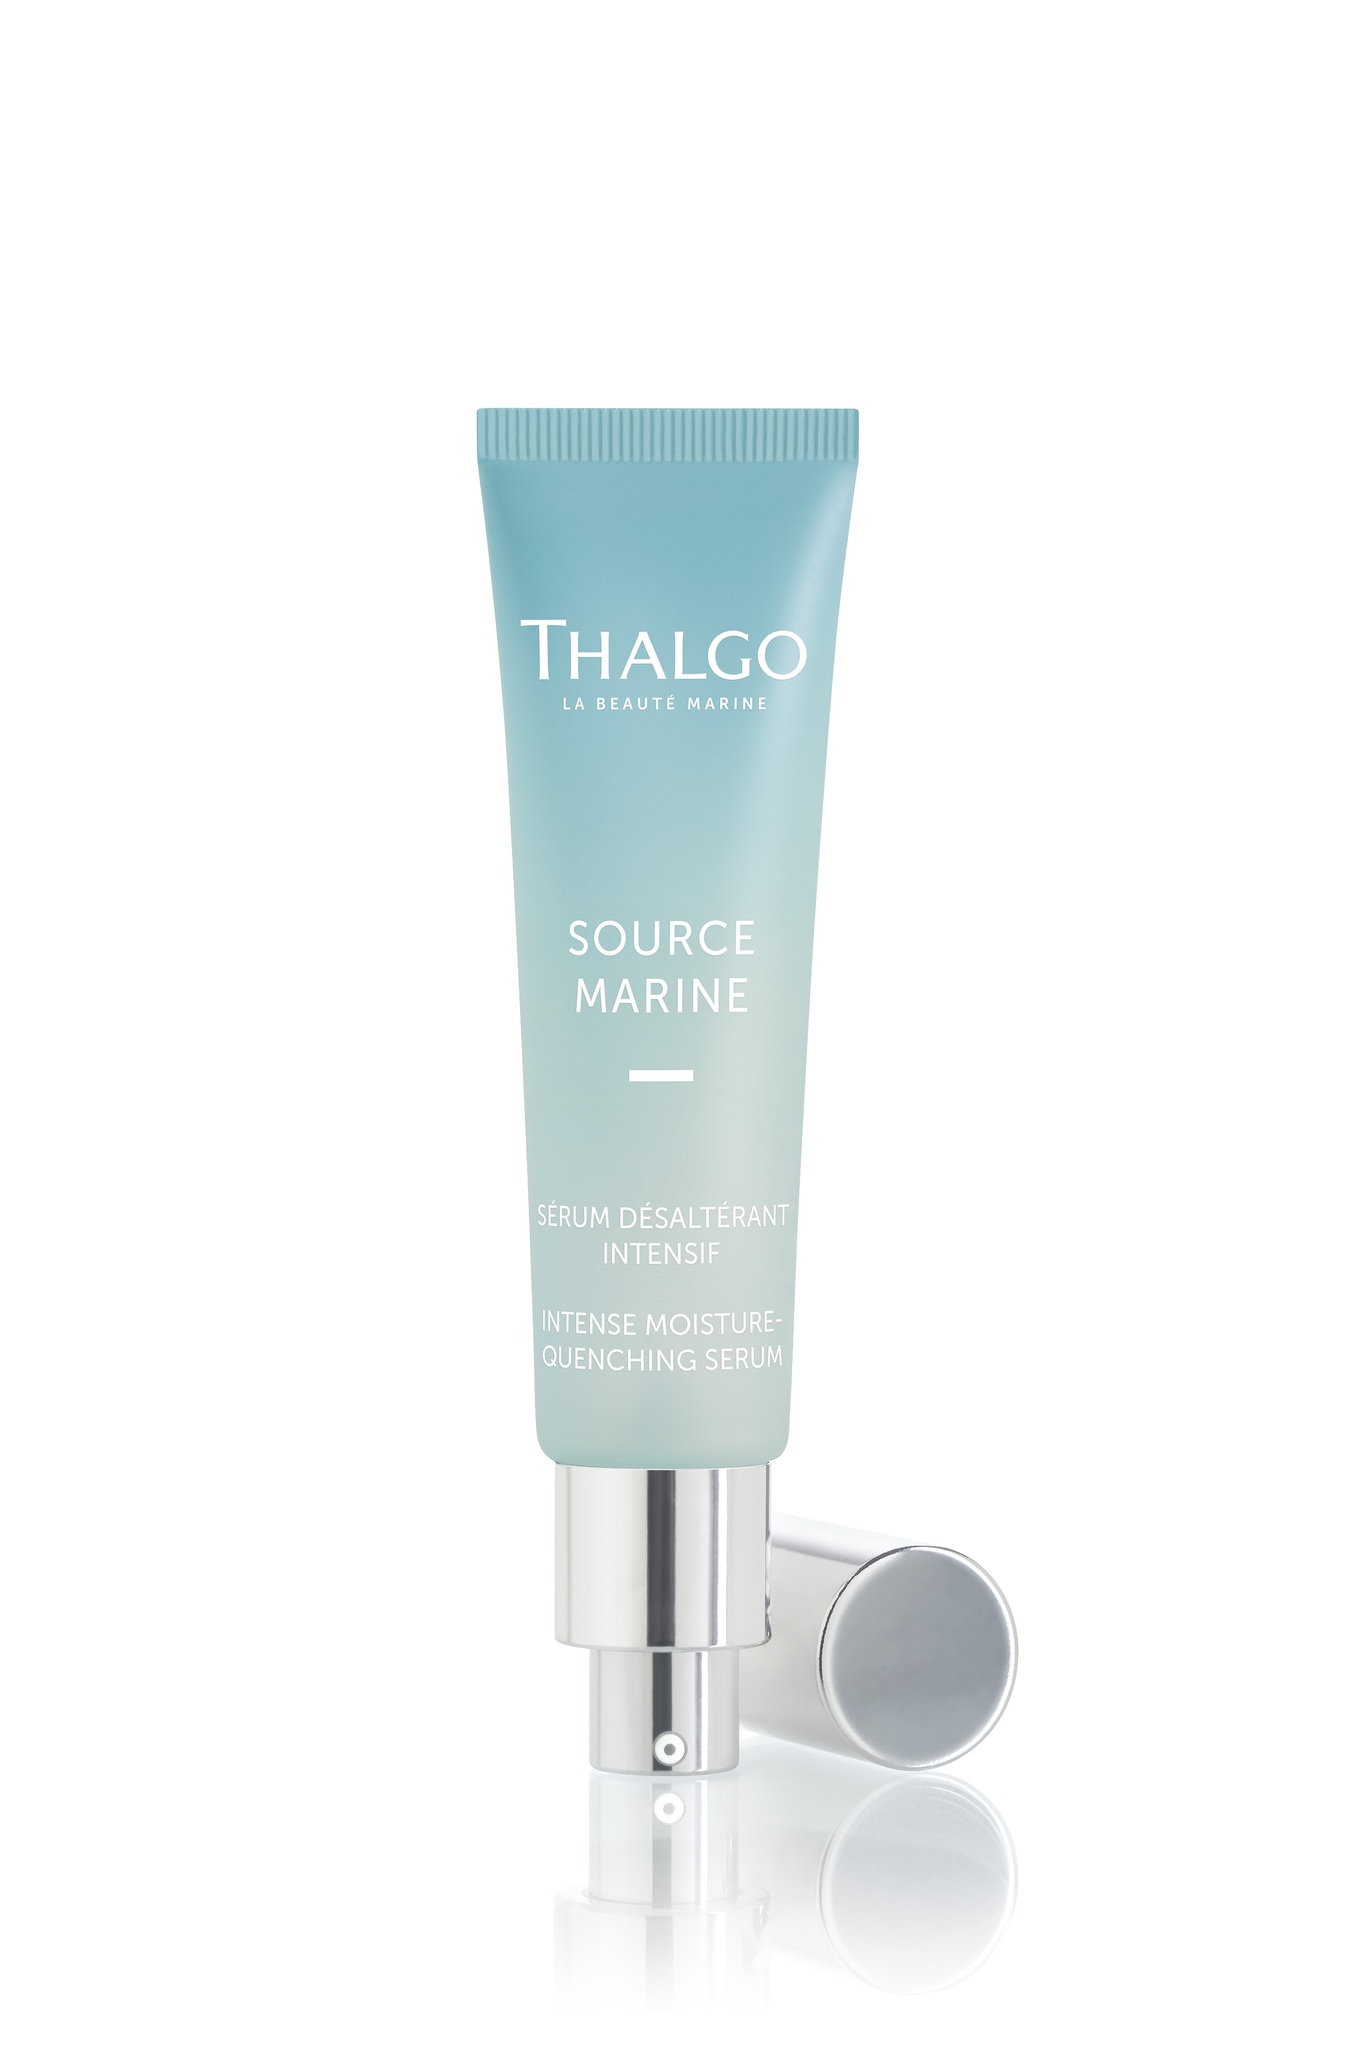 THALGO Source Marine Intense Moisture Quenching Serum, 30 ml flaske - fuktighets serum